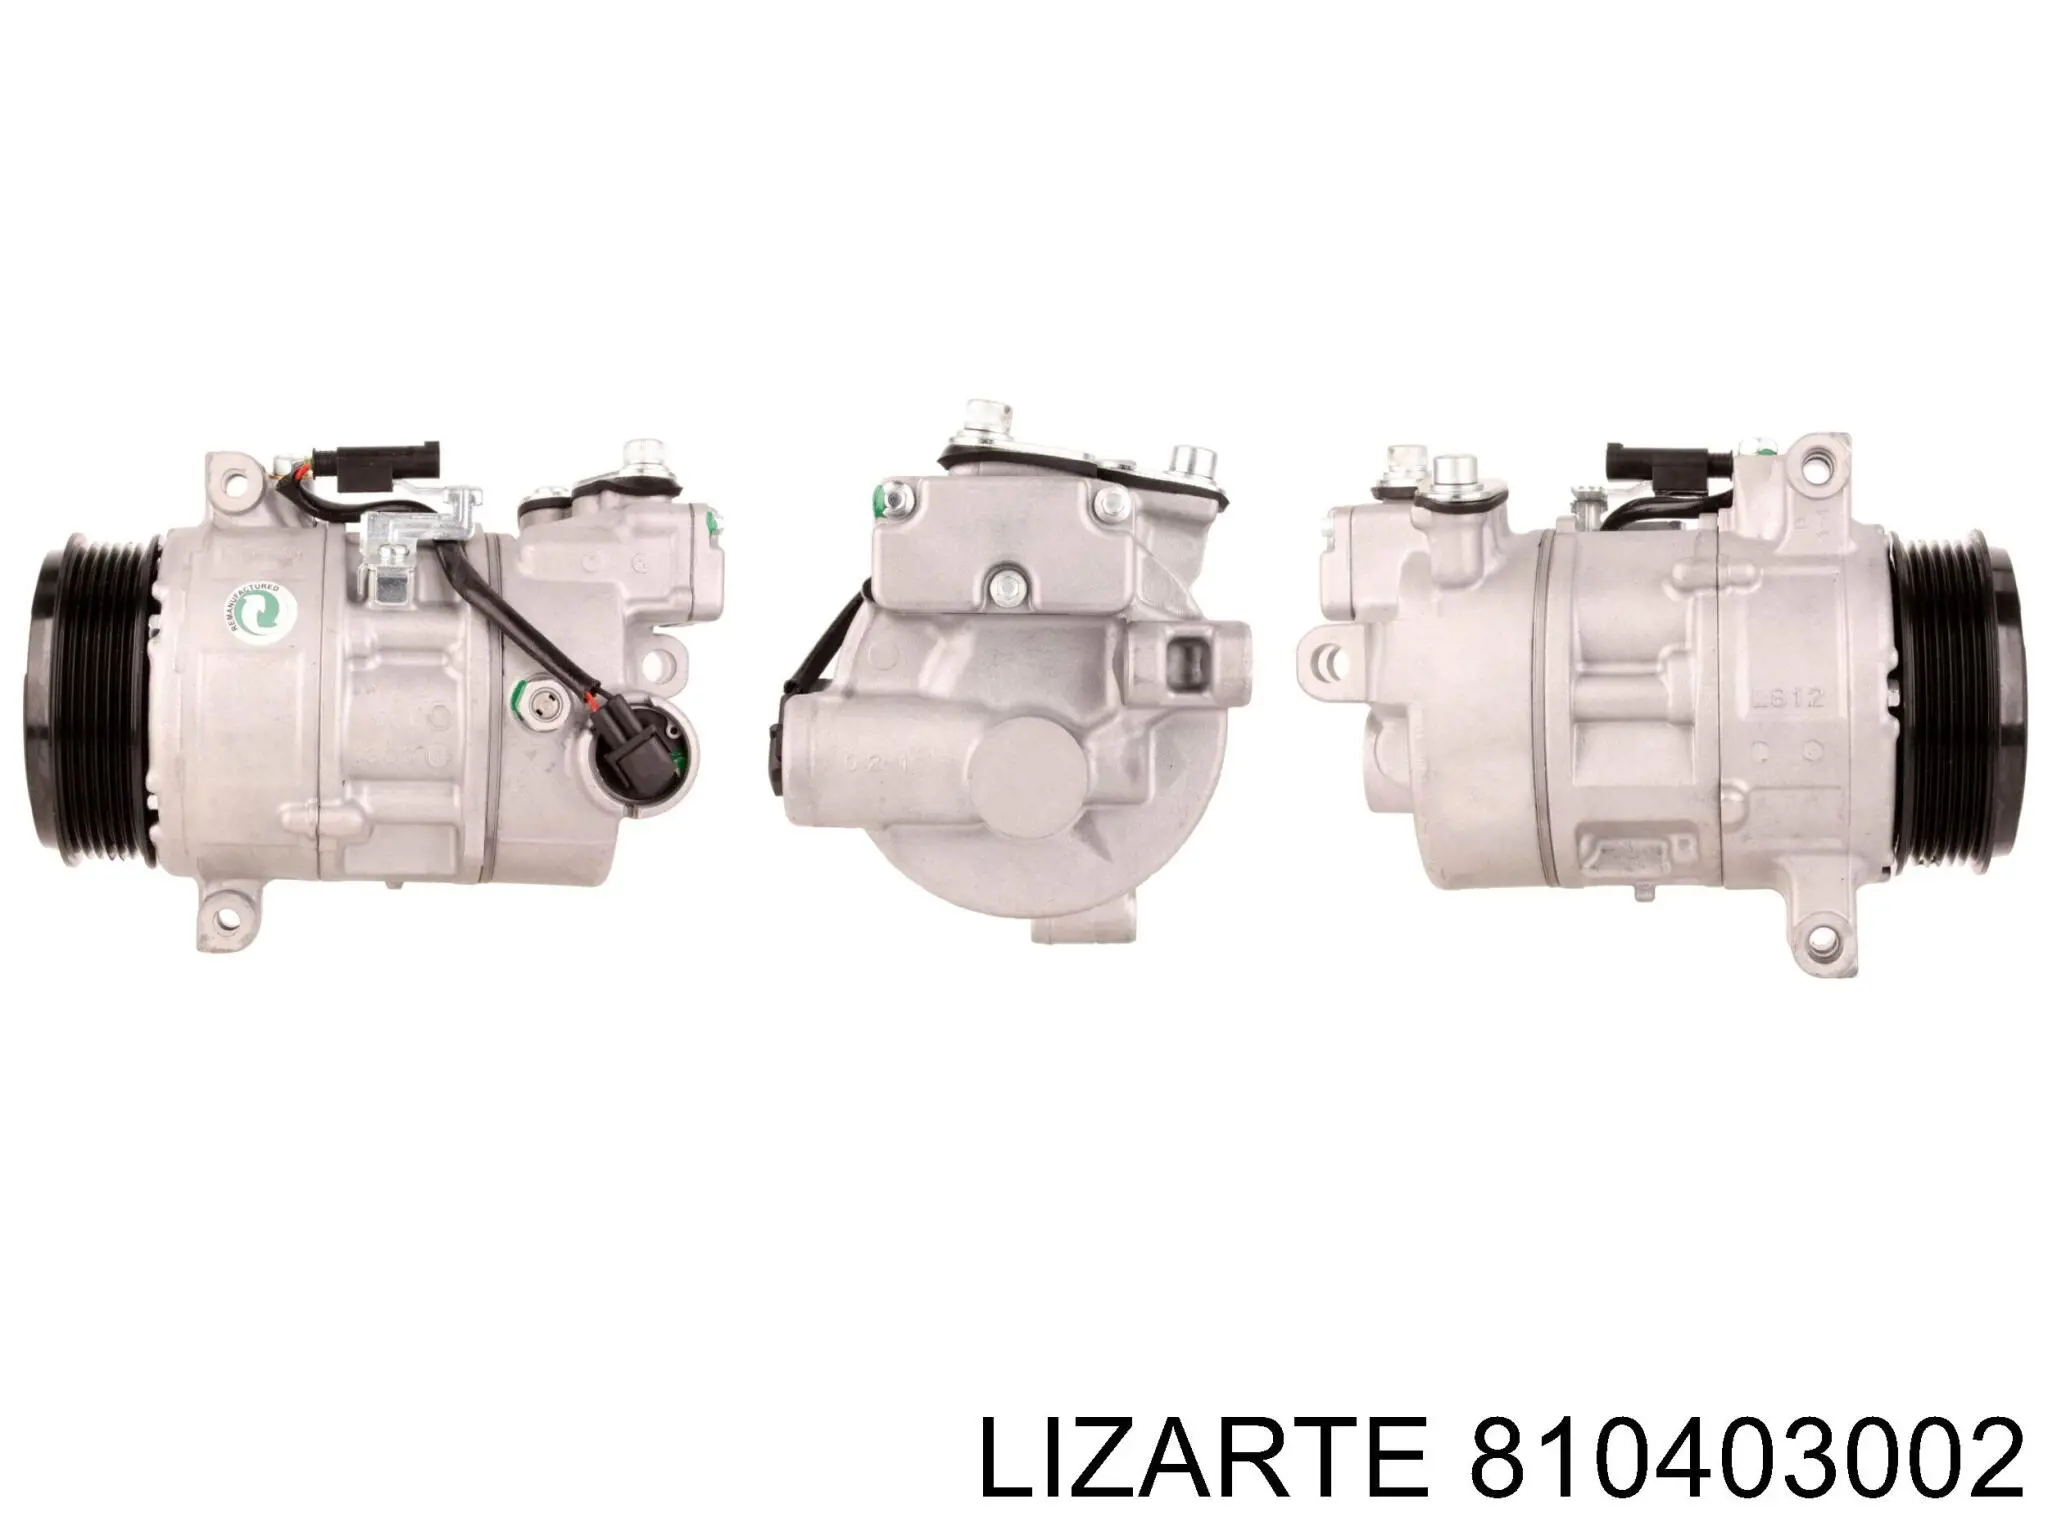 810403002 Lizarte compresor de aire acondicionado